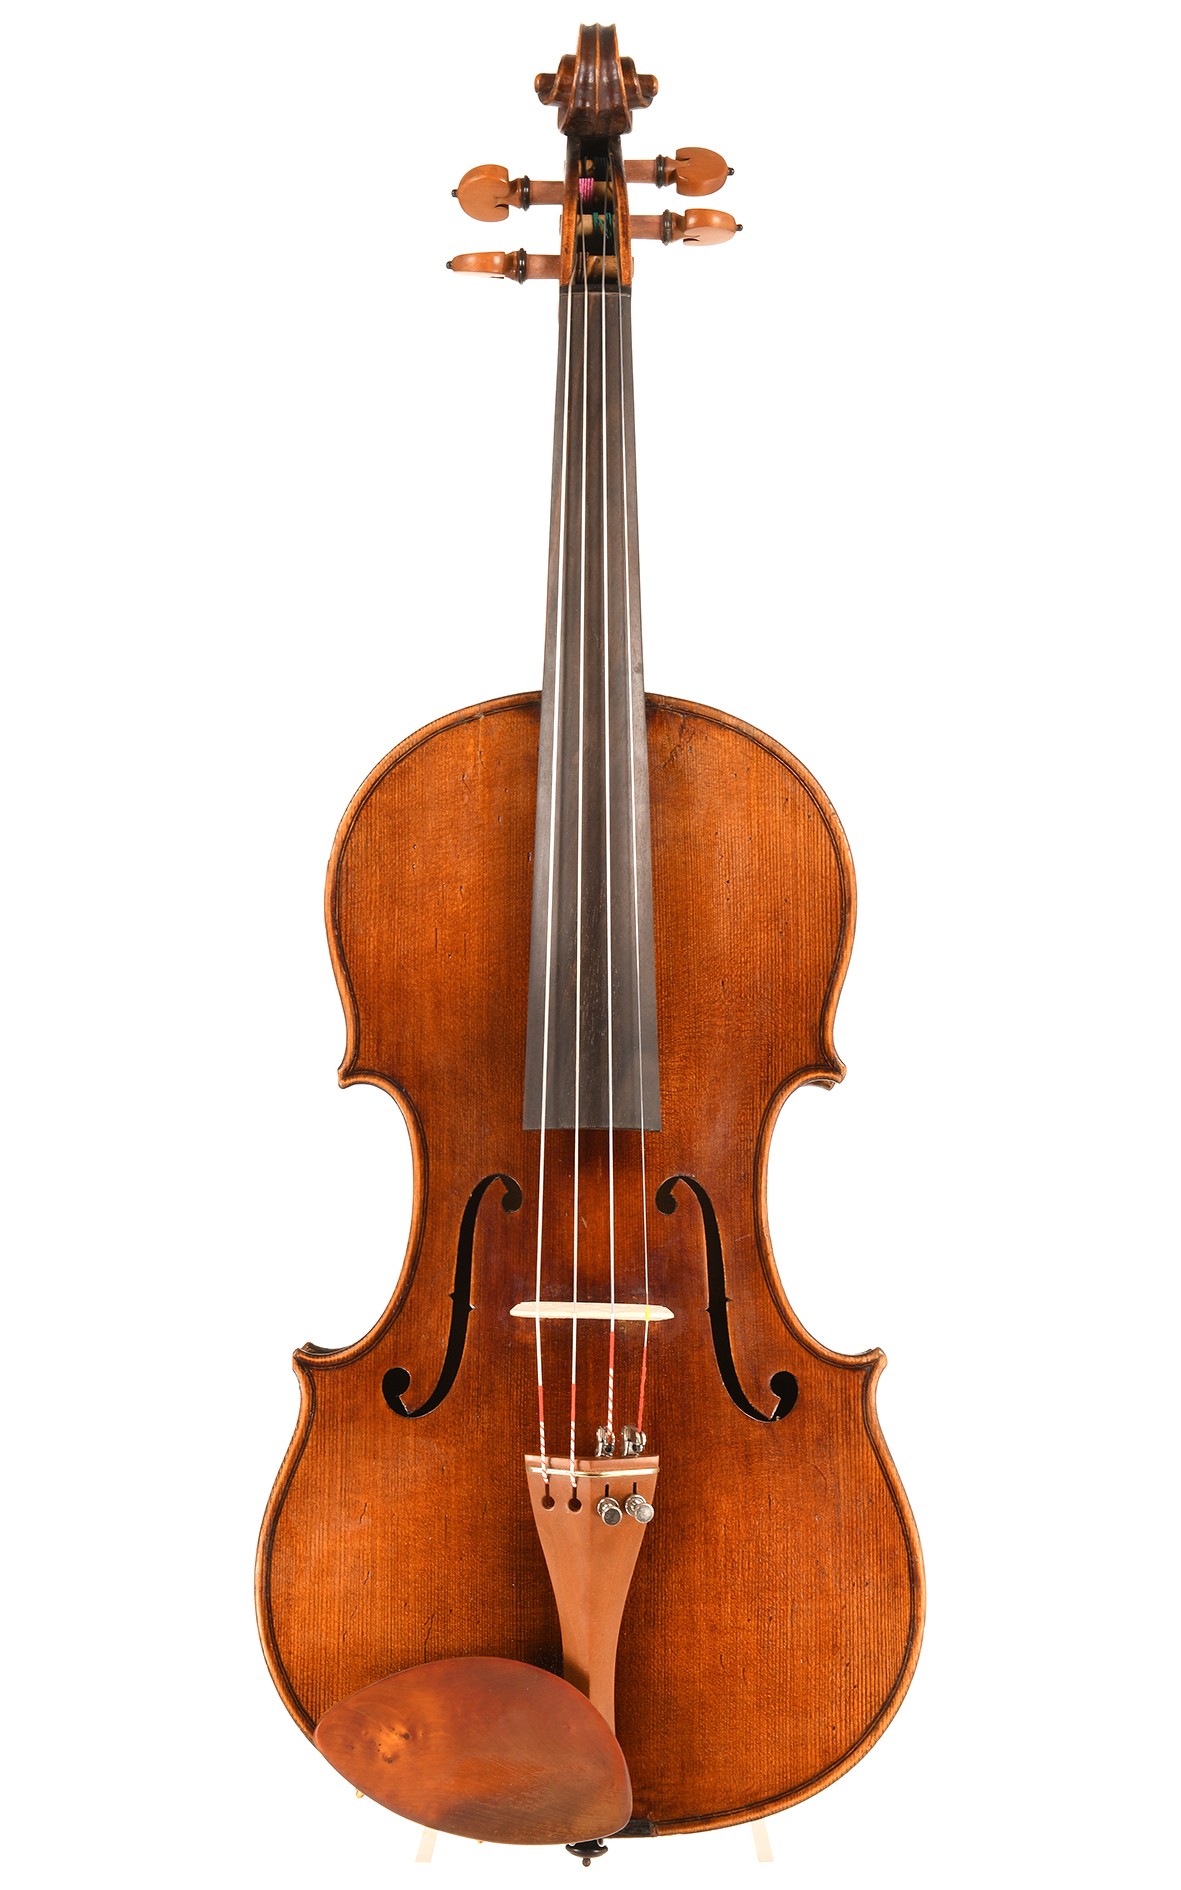 German violin, Markneukirchen, after Stradivari